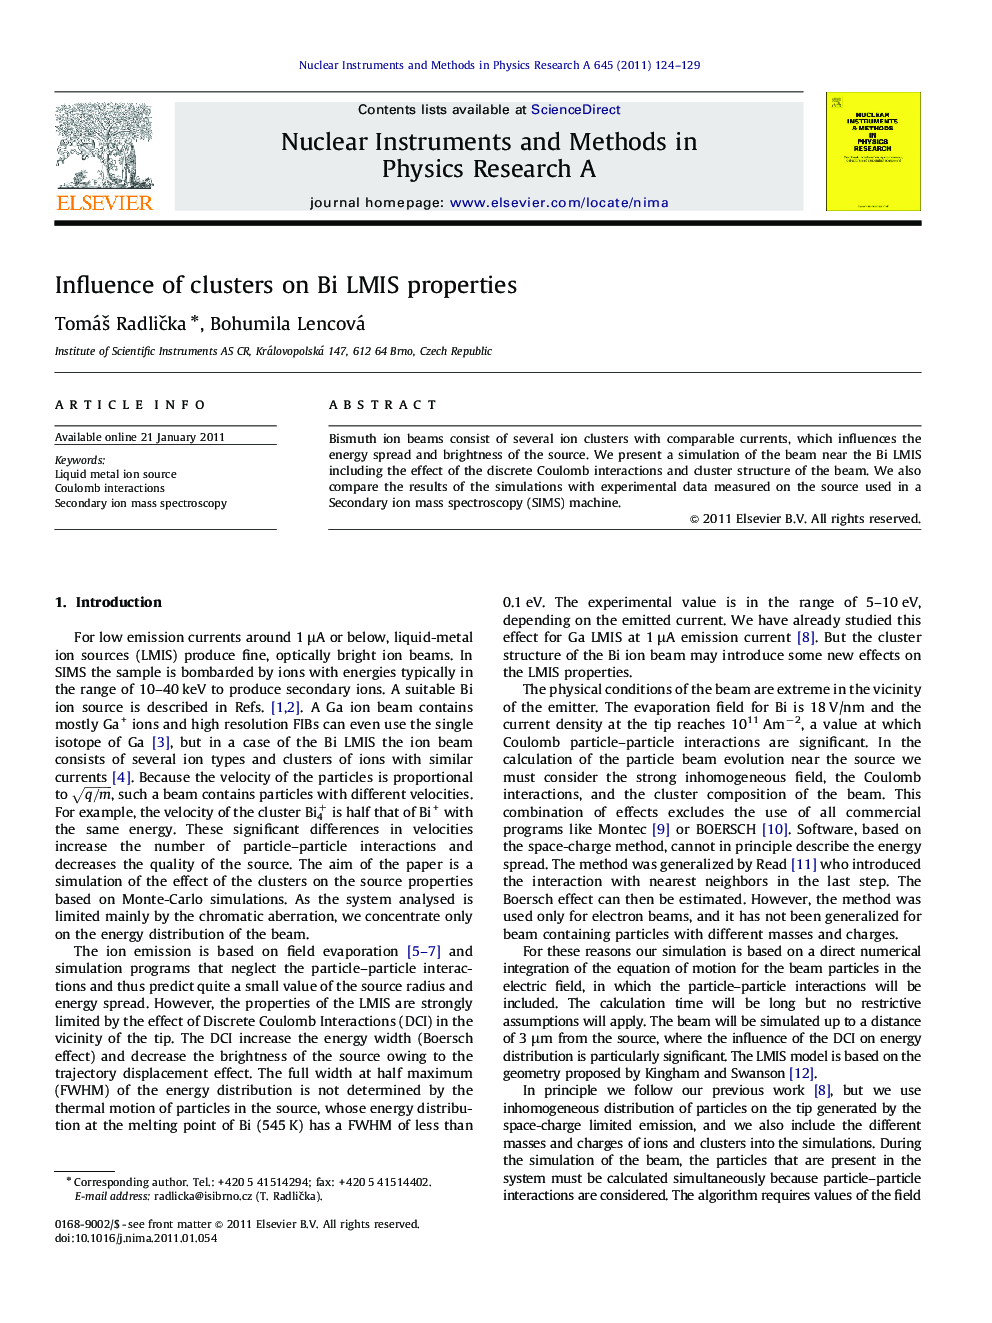 Influence of clusters on Bi LMIS properties